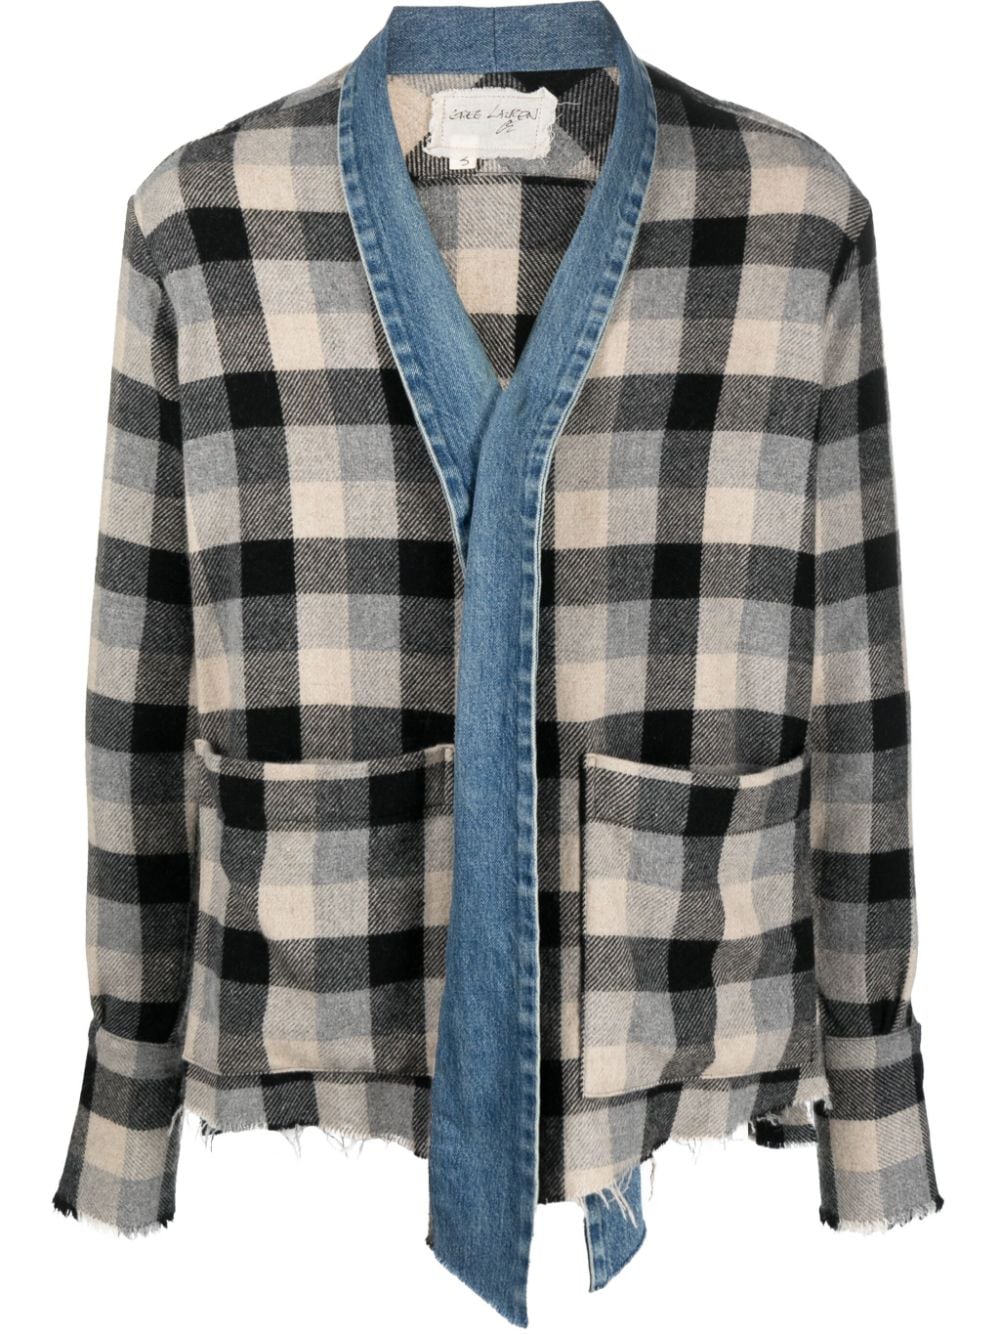 Greg Lauren - panelled plaid shirt jacket